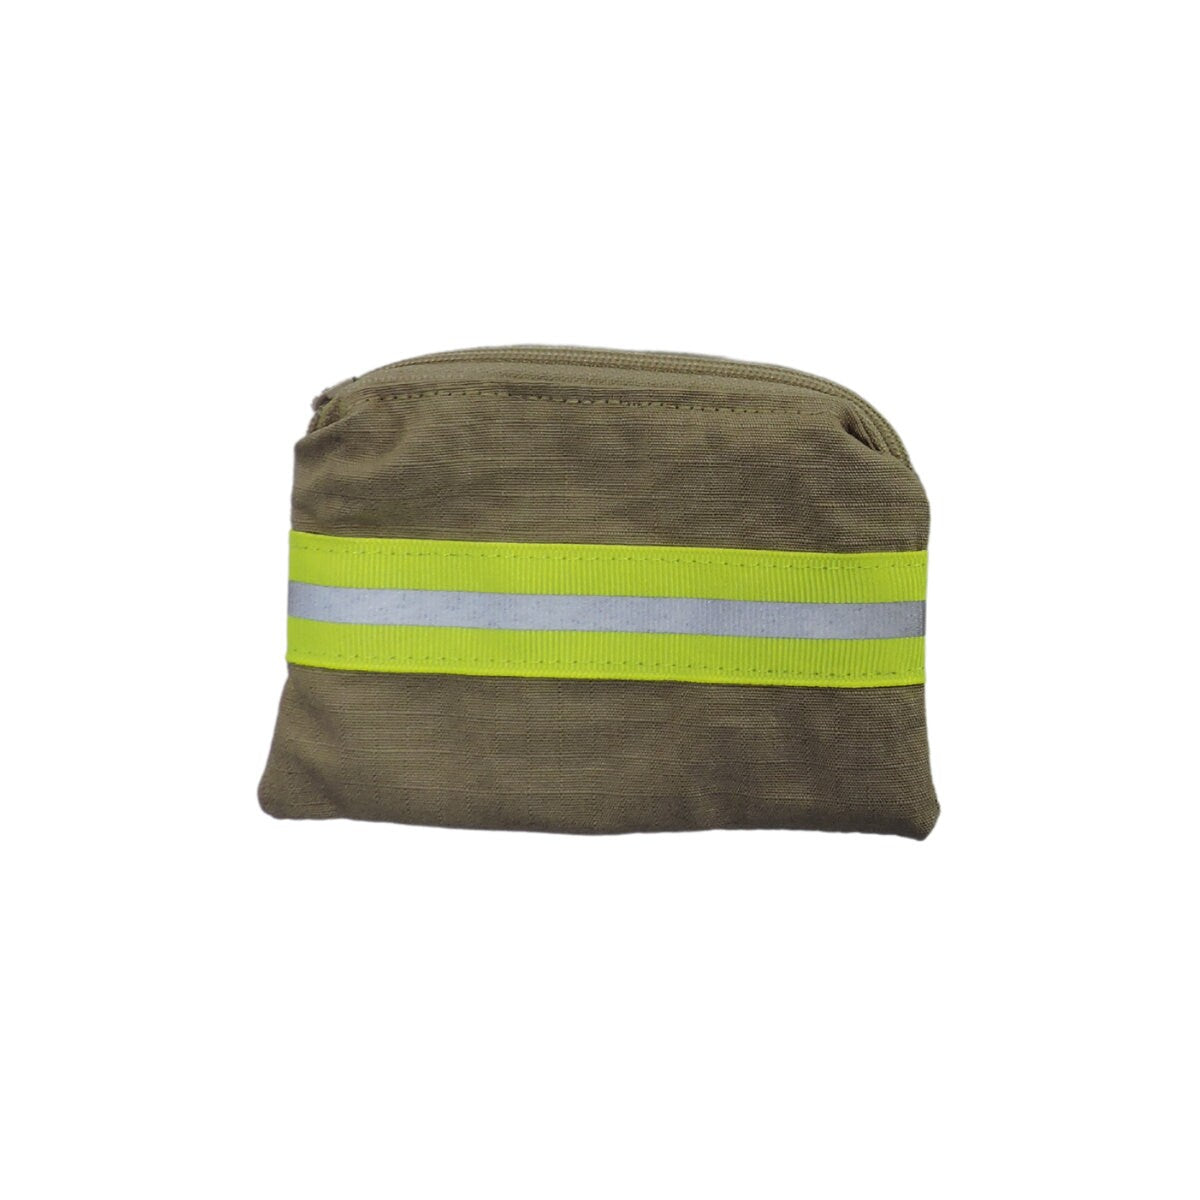 tan Firefighter Change purse